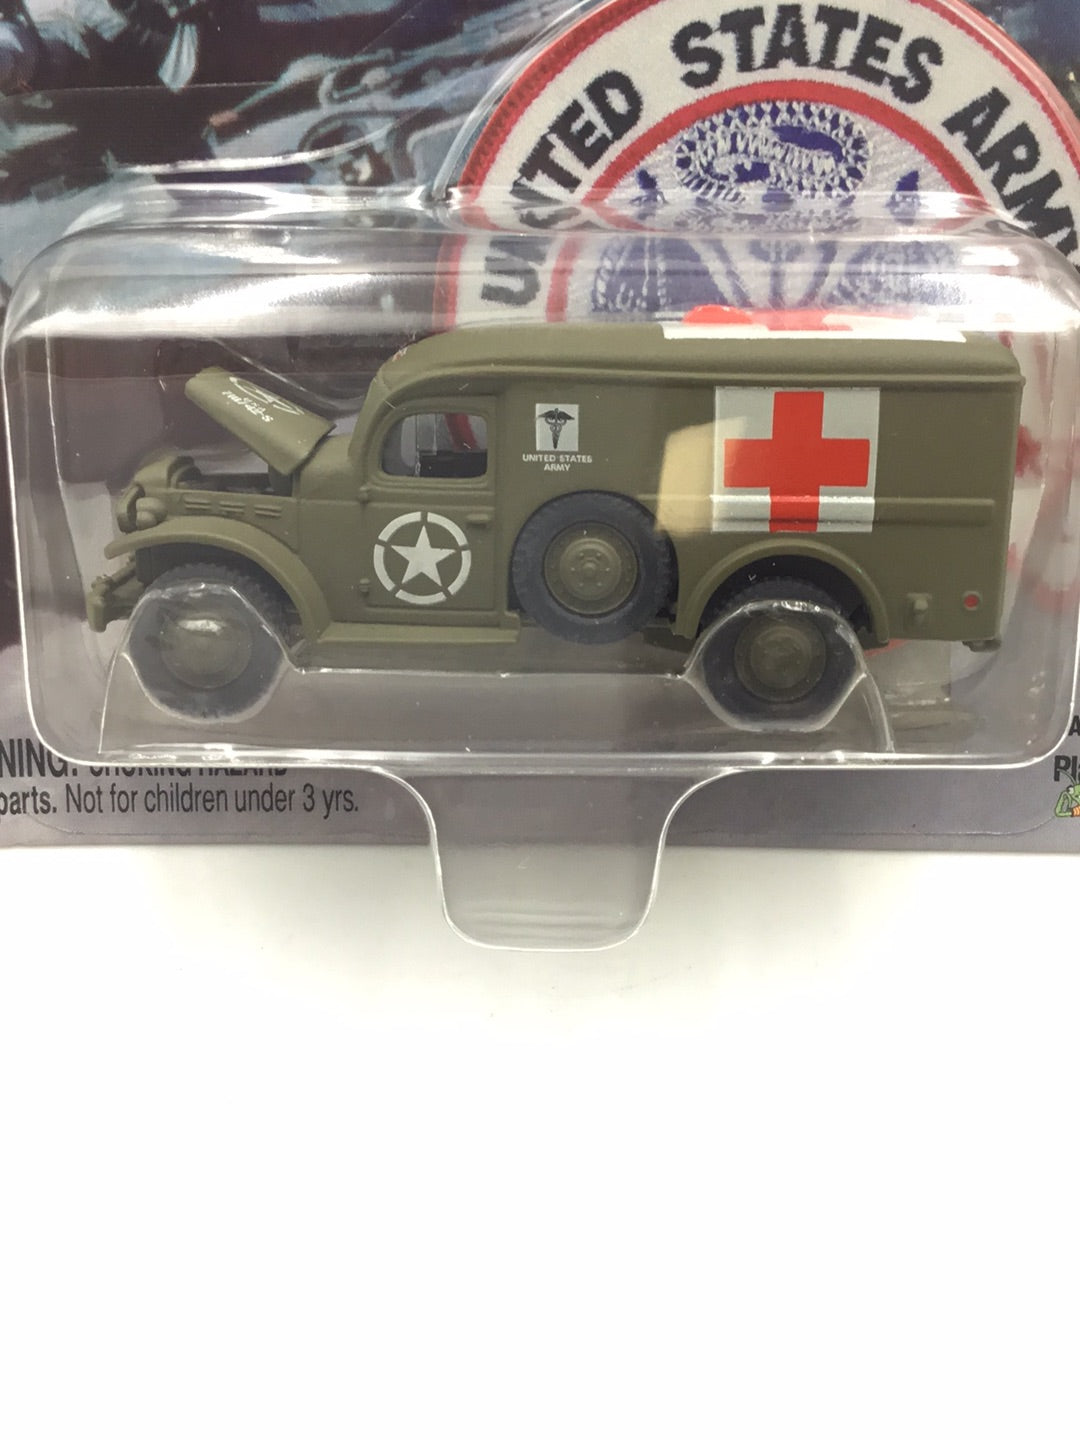 Johnny lightning Lightning Brigade WWII WC54 Ambulance TT5